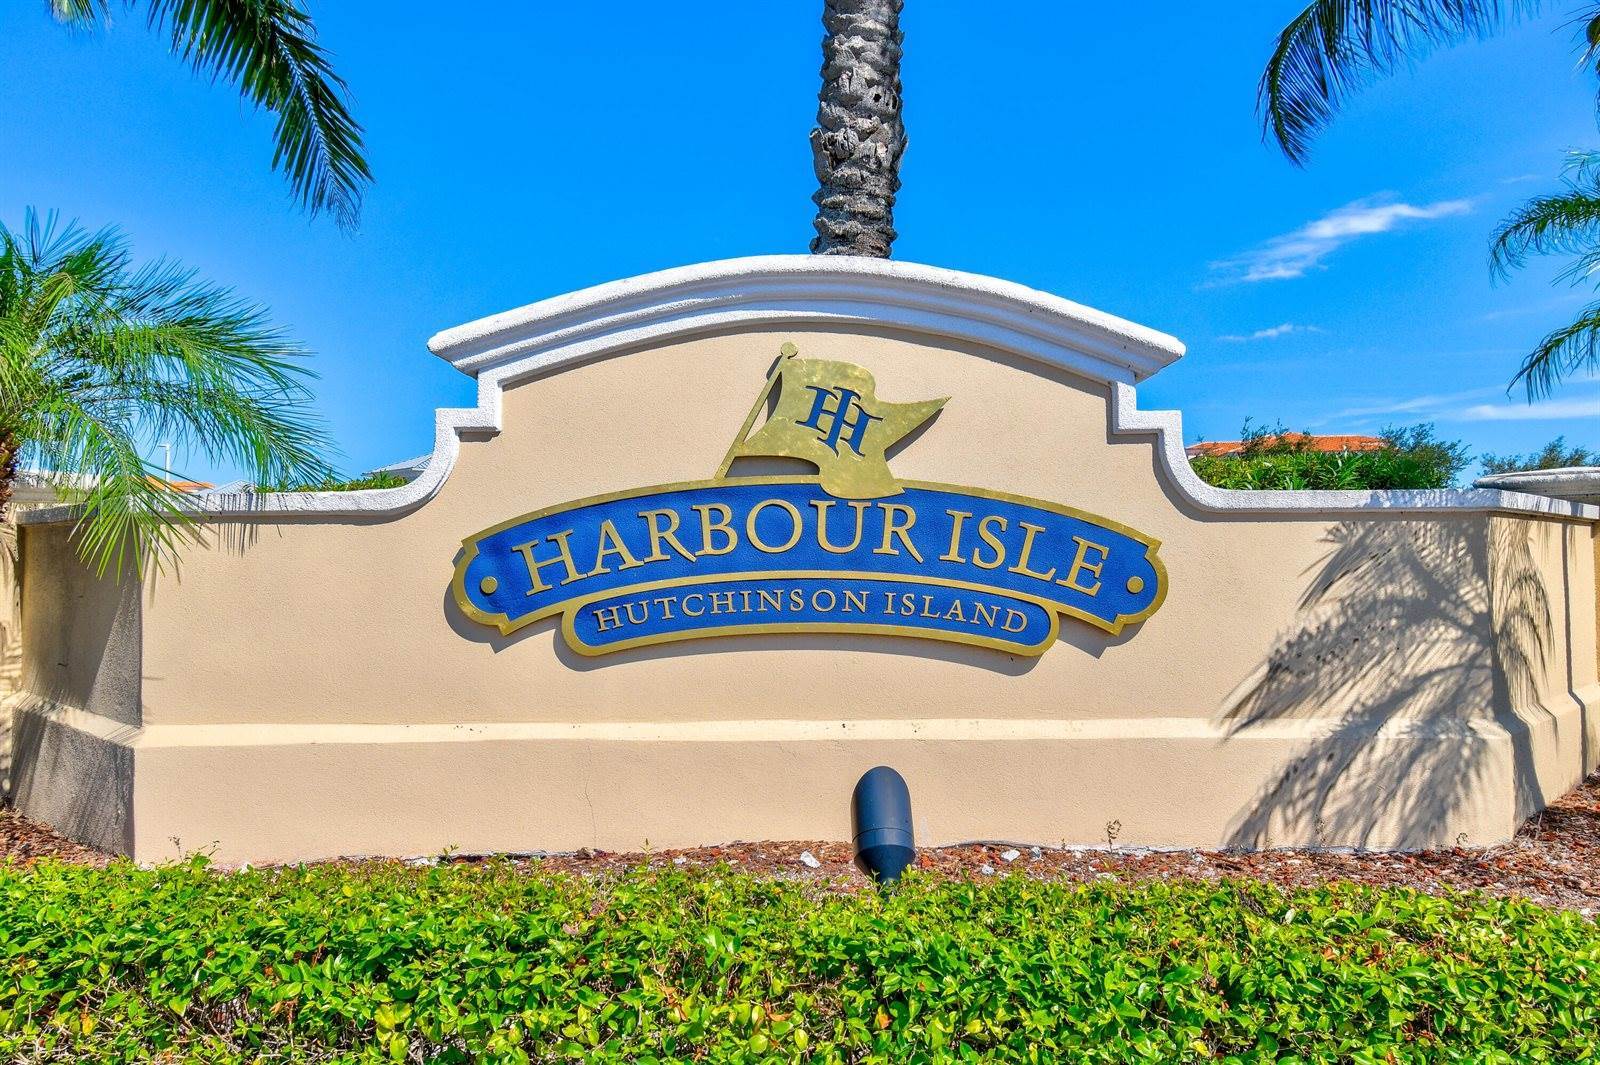 4 Harbour Isle Drive East, #106, Fort Pierce, FL 34949